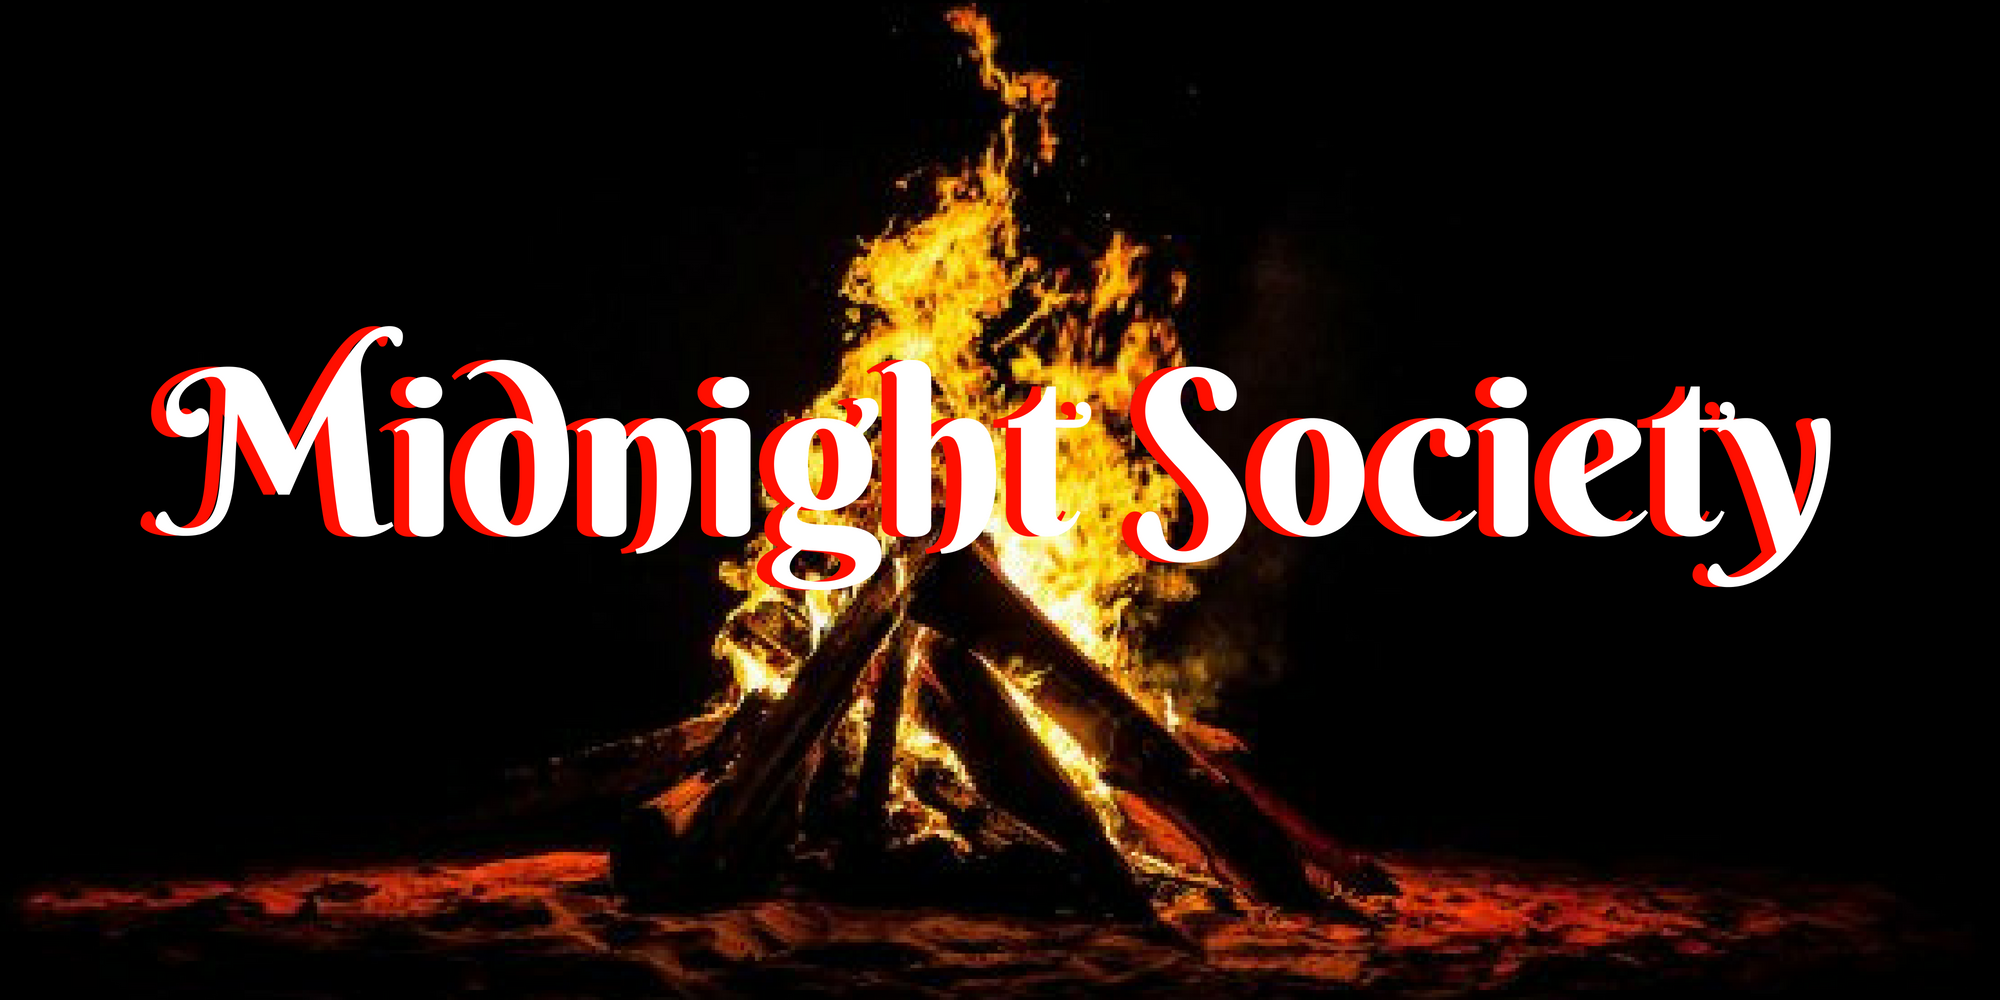 Midnight Society: Why You're Still Afraid of the Dark